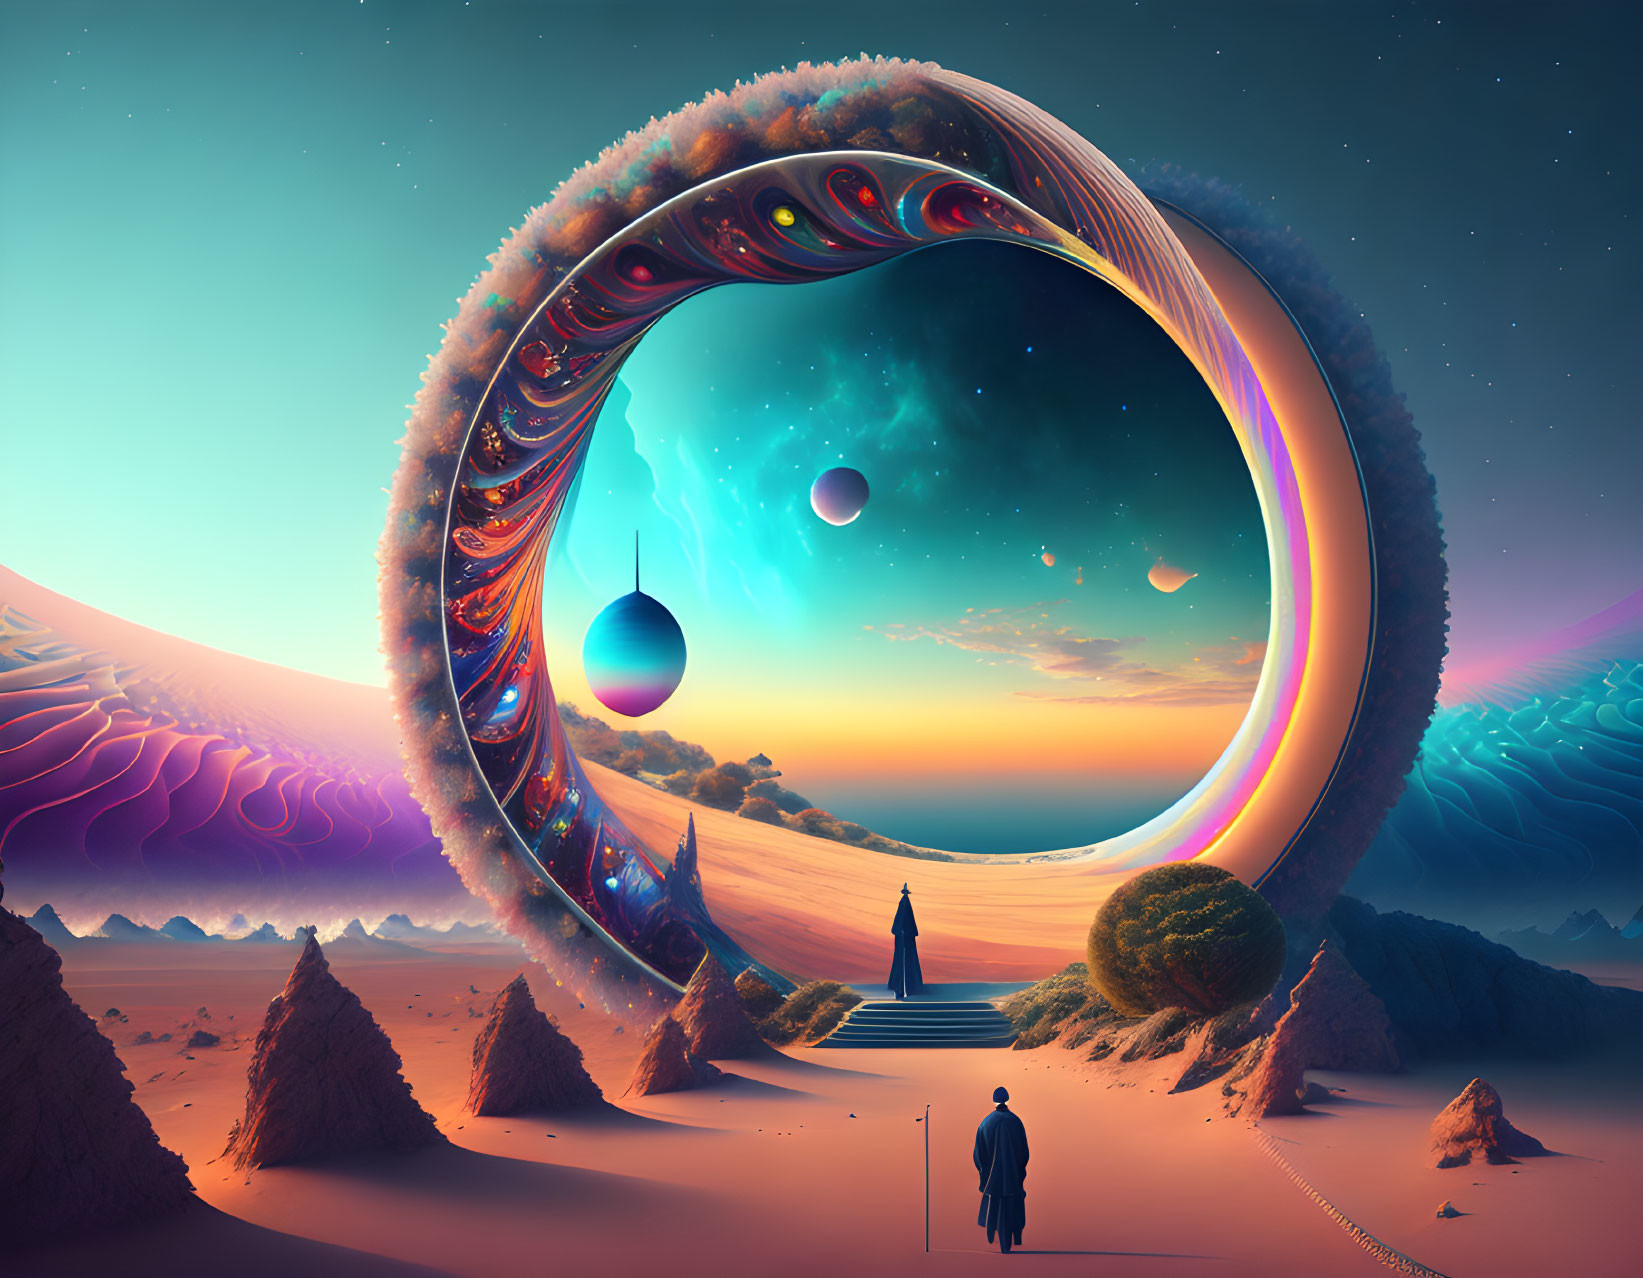 Person with cane gazes at surreal celestial portal in alien desert landscape